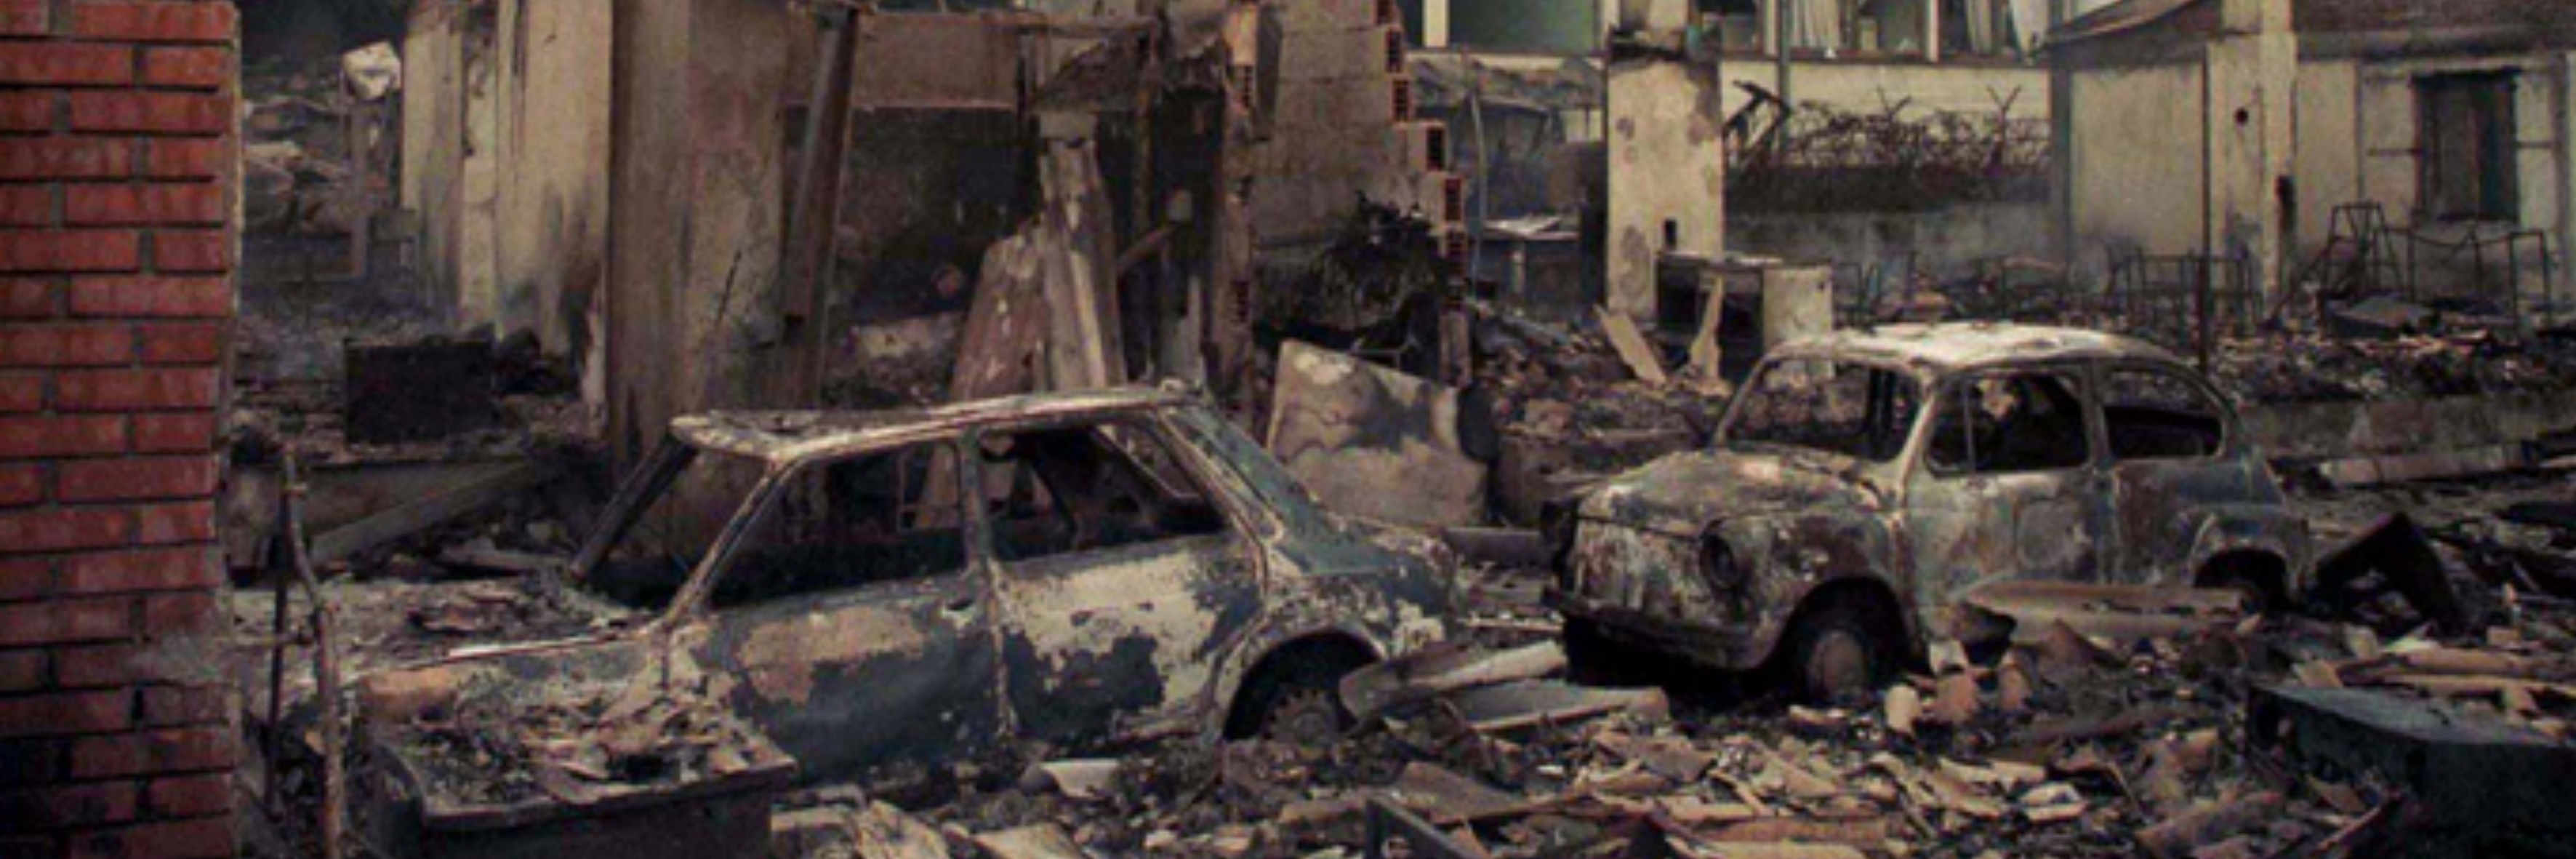 24. März 1999: Bombardierung Jugoslawiens